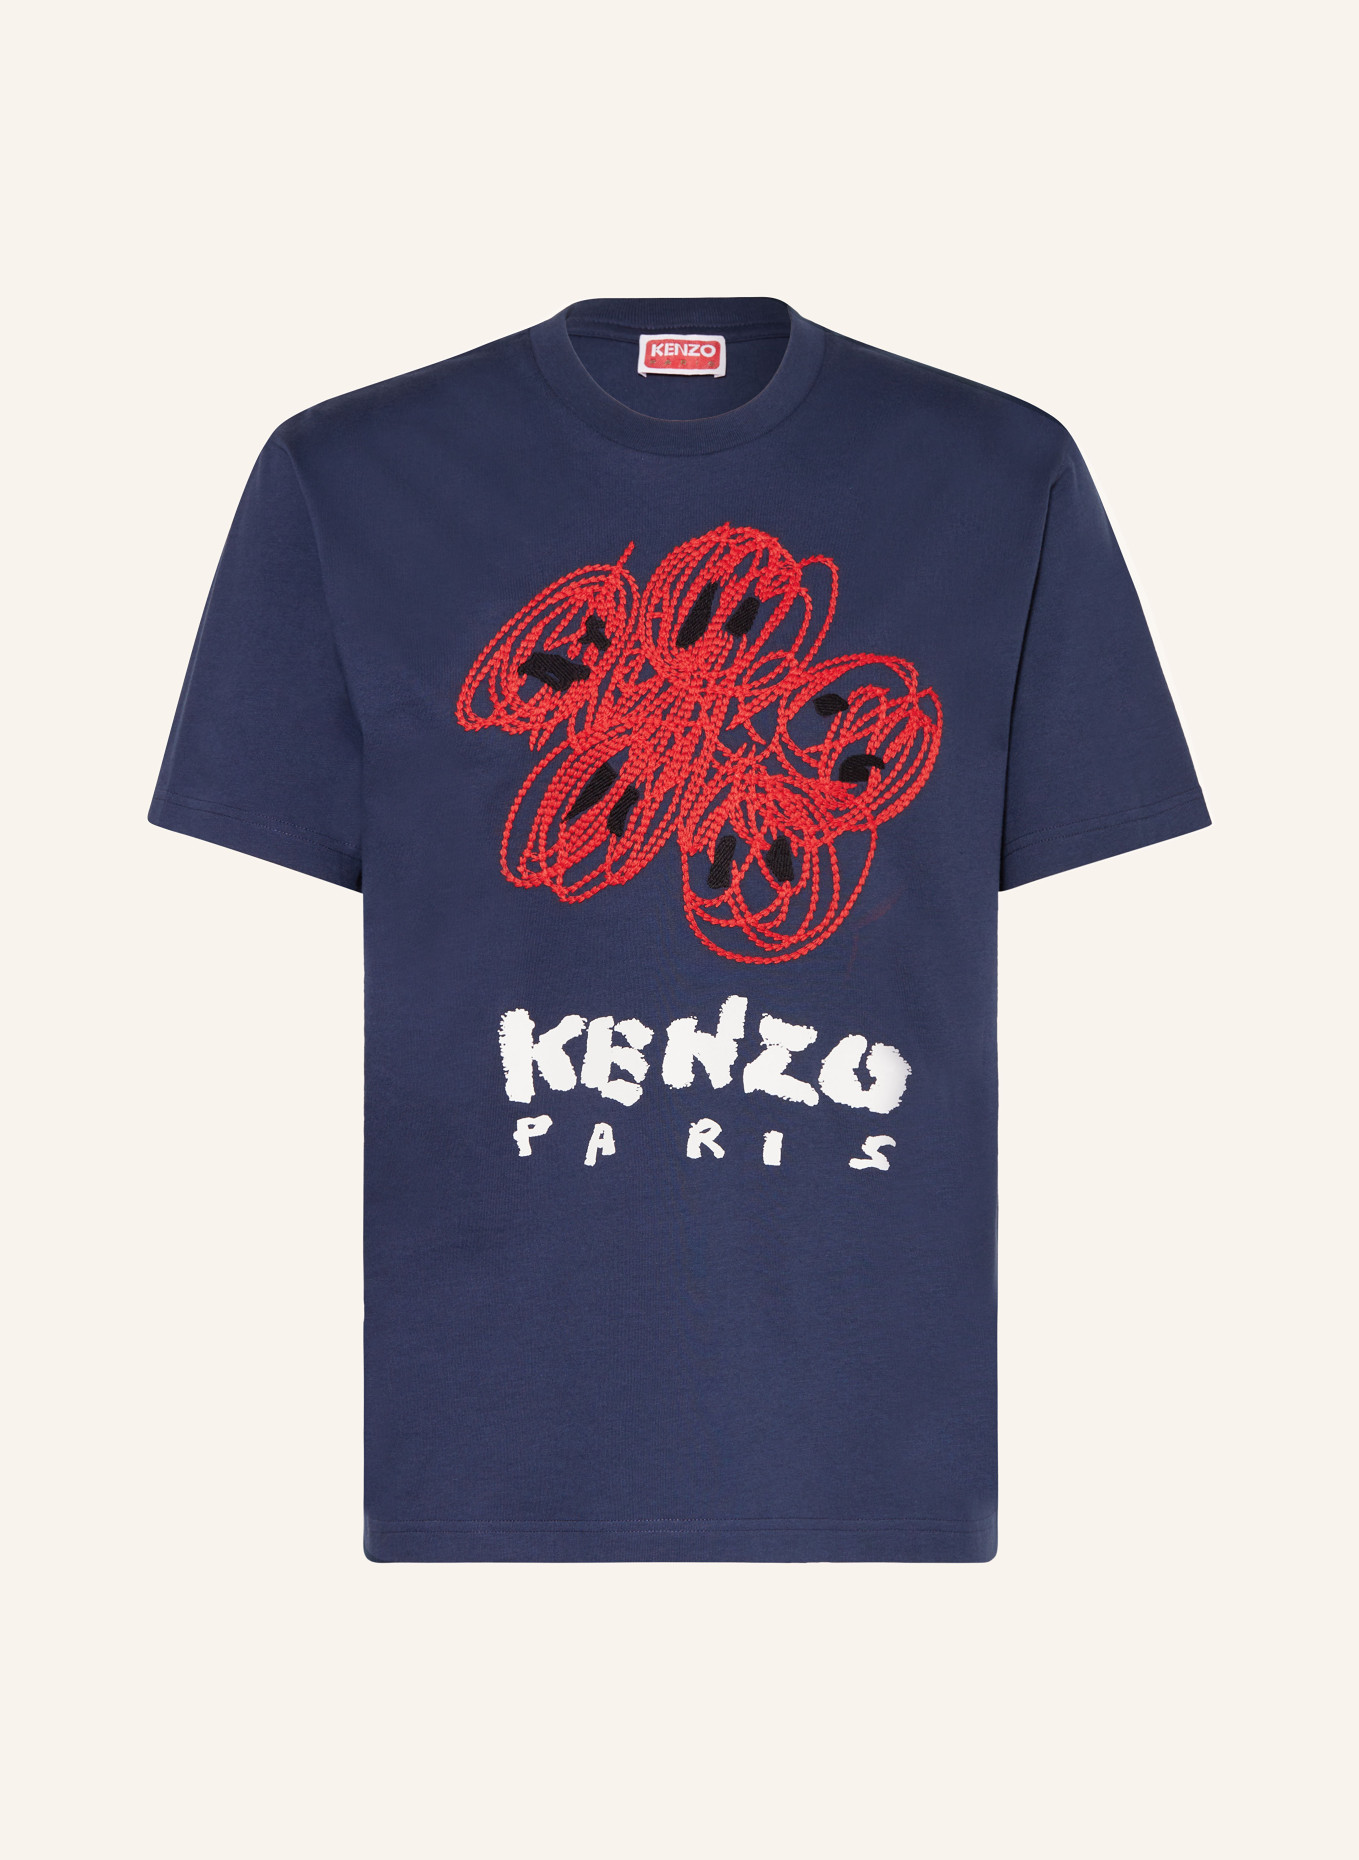 KENZO T-Shirt, Farbe: DUNKELBLAU/ ROT/ WEISS (Bild 1)